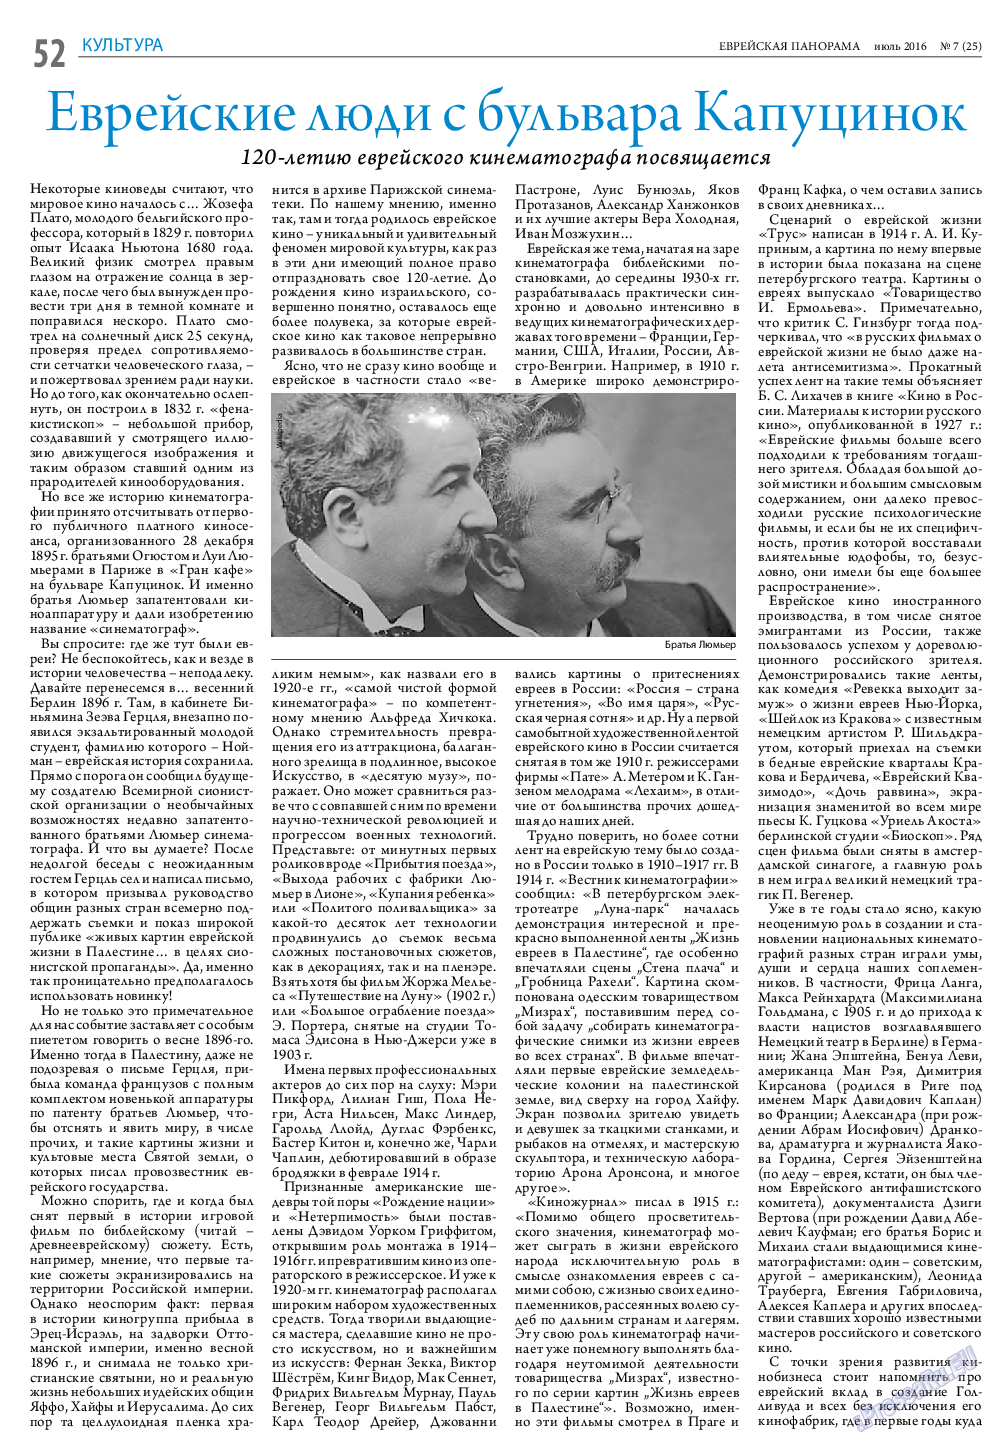 Еврейская панорама, газета. 2016 №7 стр.52